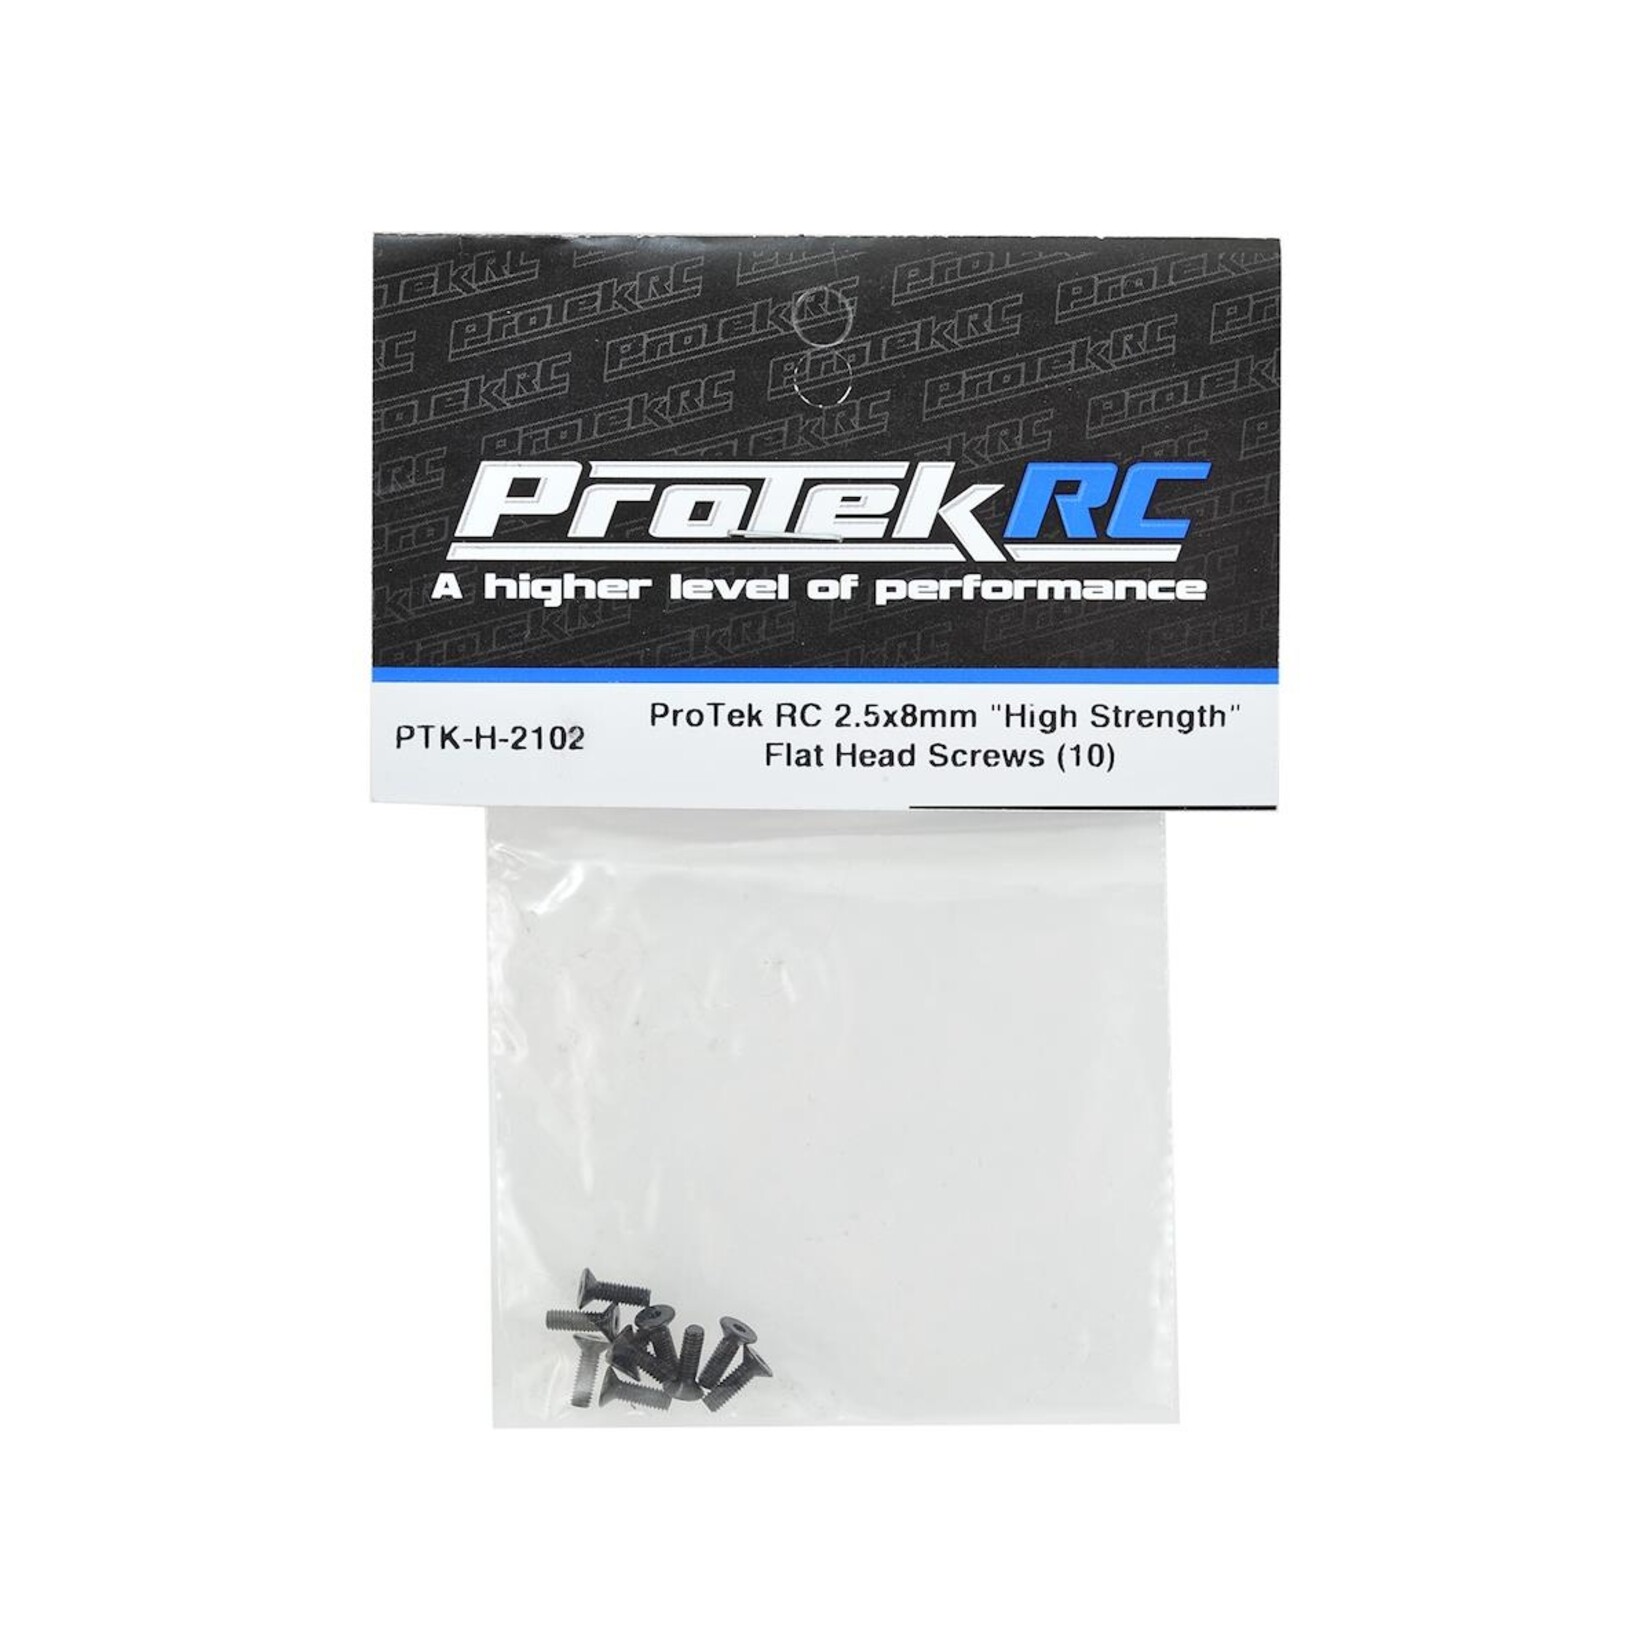 ProTek RC ProTek RC 2.5x8mm "High Strength" Flat Head Screws (10) #PTK-H-2102